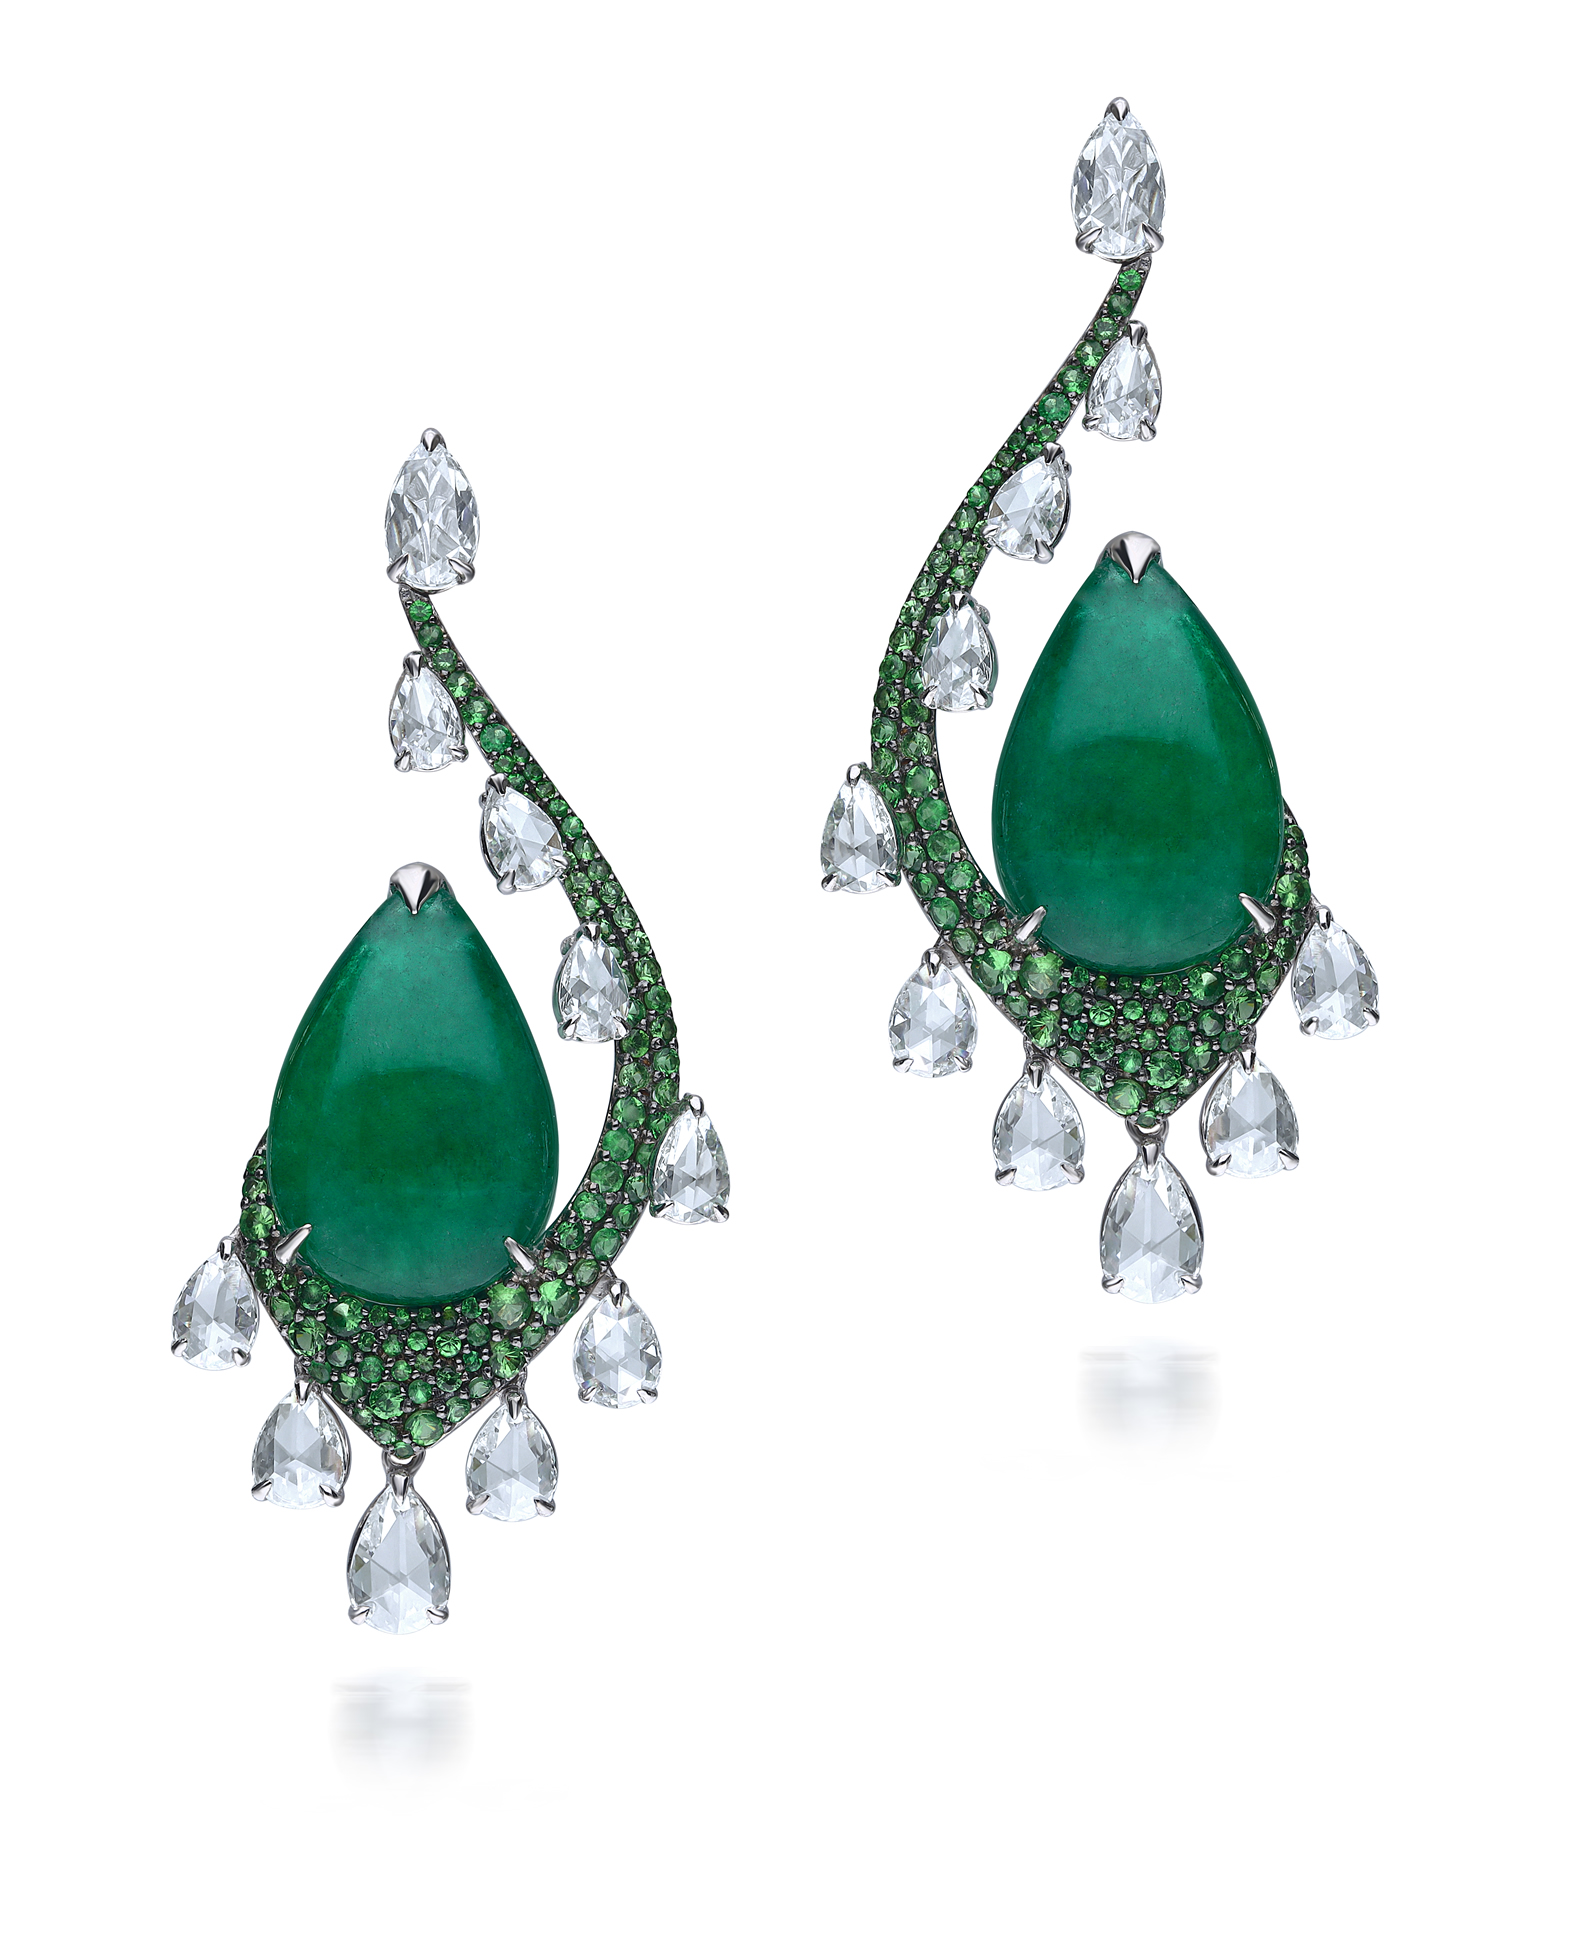 Zambian Emerald, Tsavorite and Diamond Earrings 